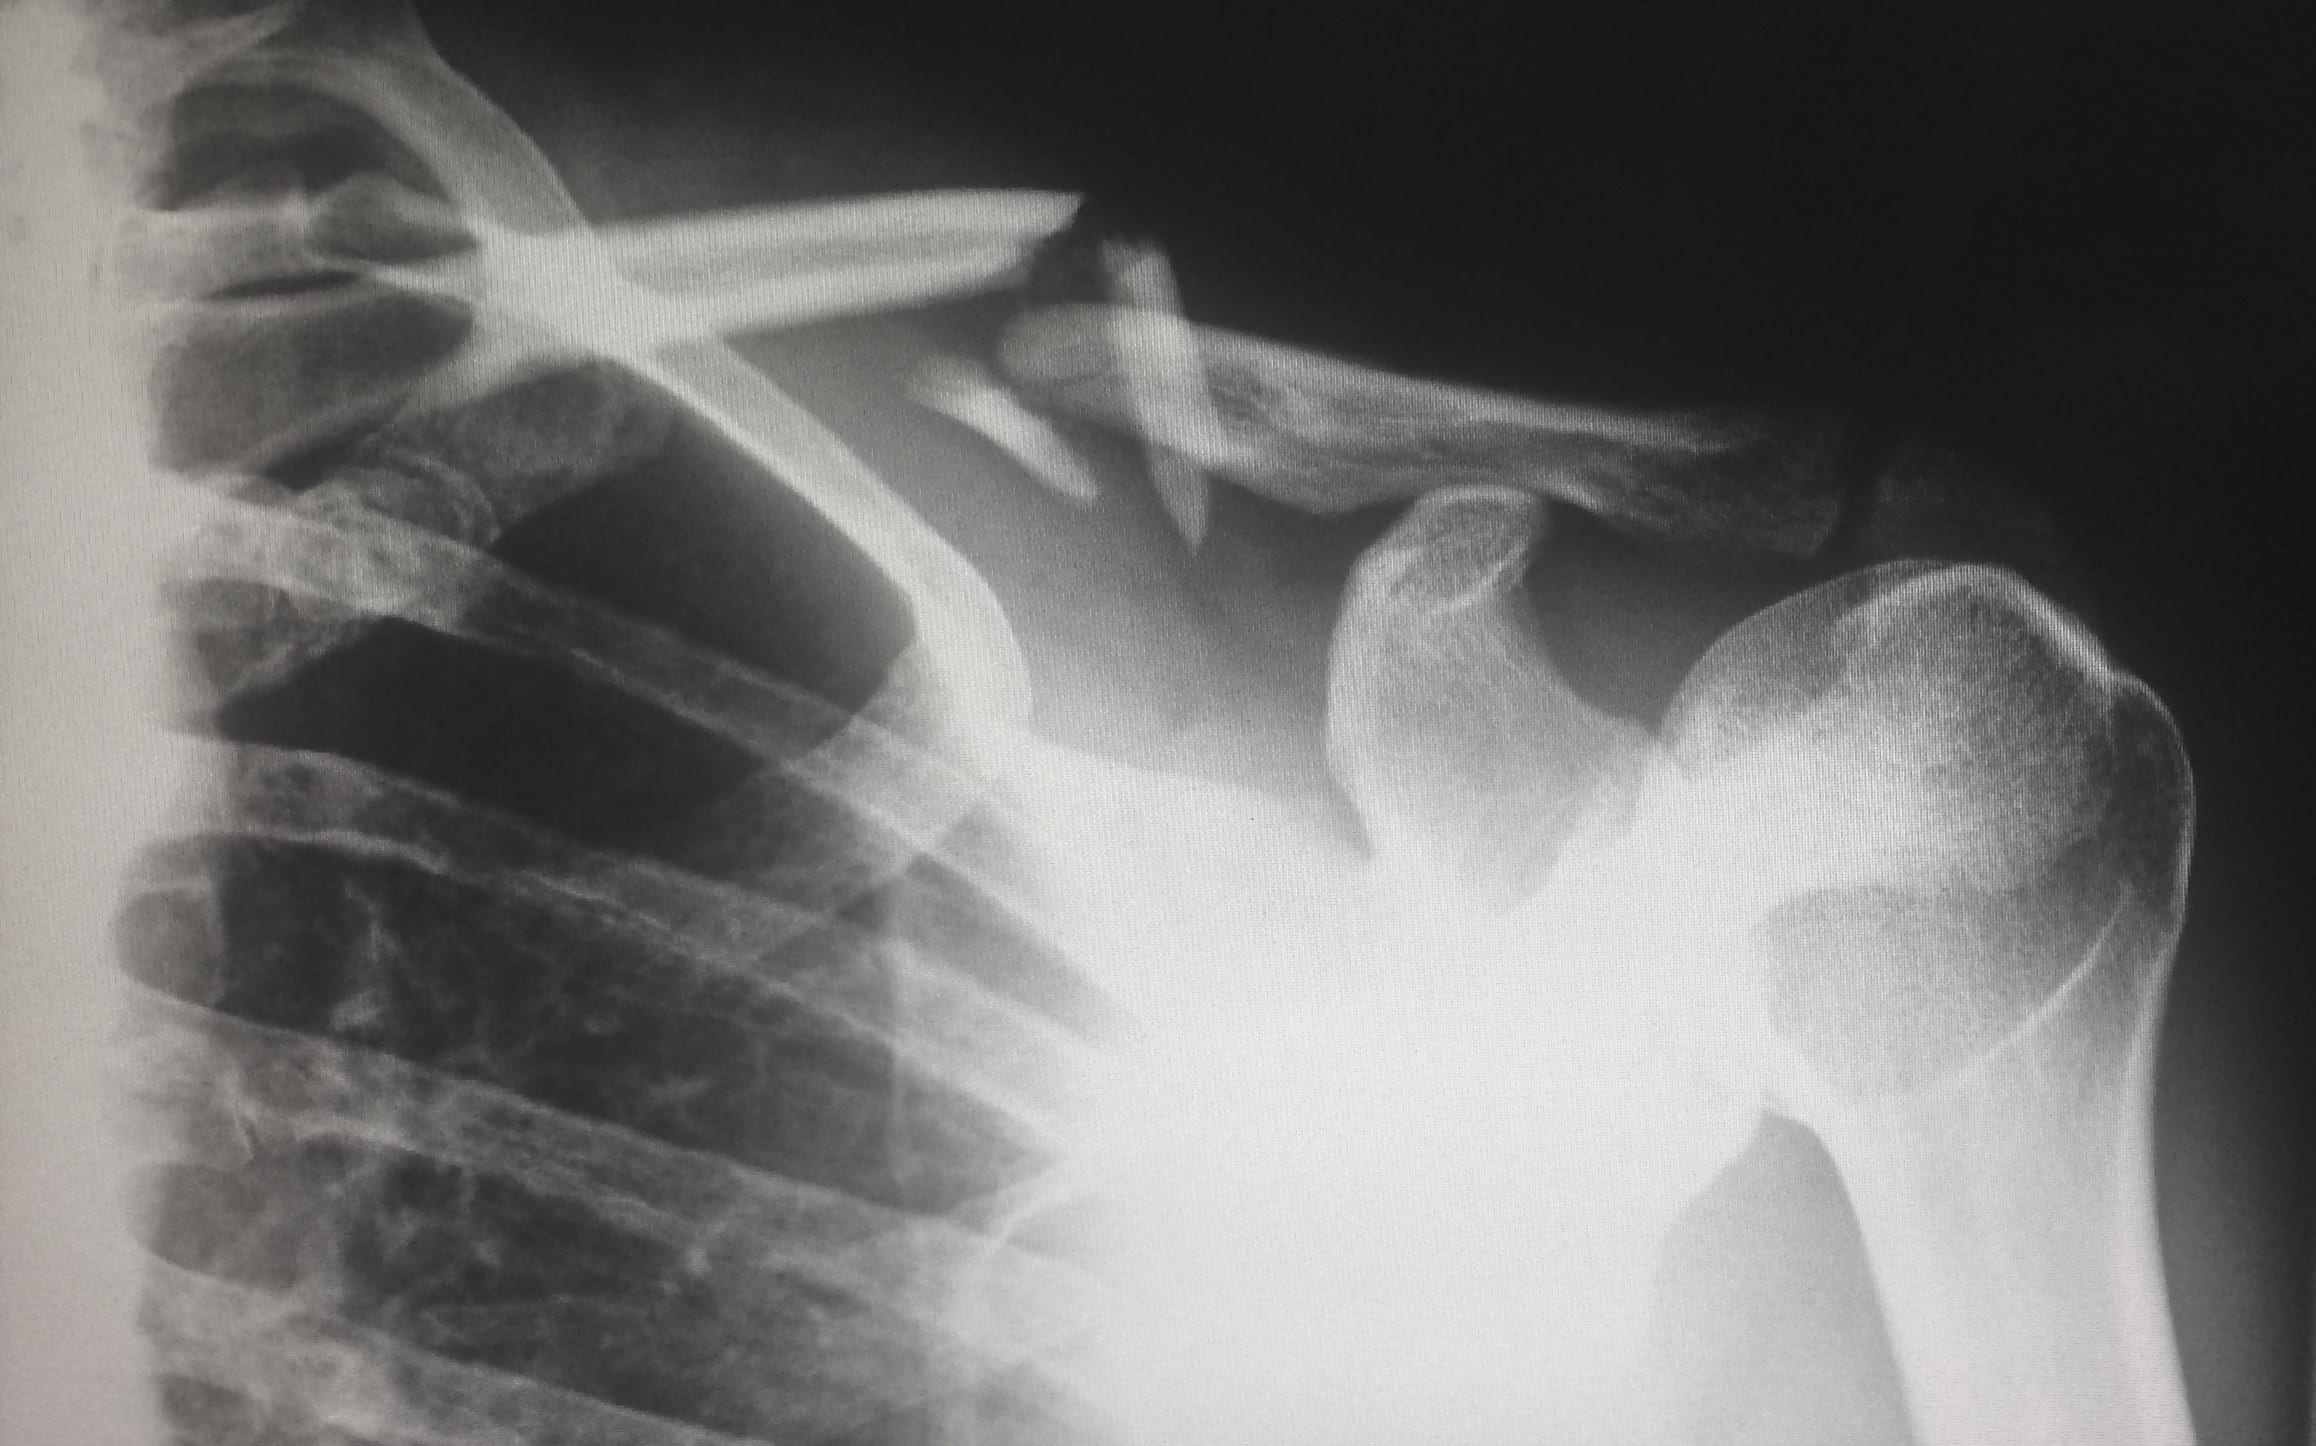 X-ray showing broken clavicle; image by Harlie Raethel, via unsplash.com.